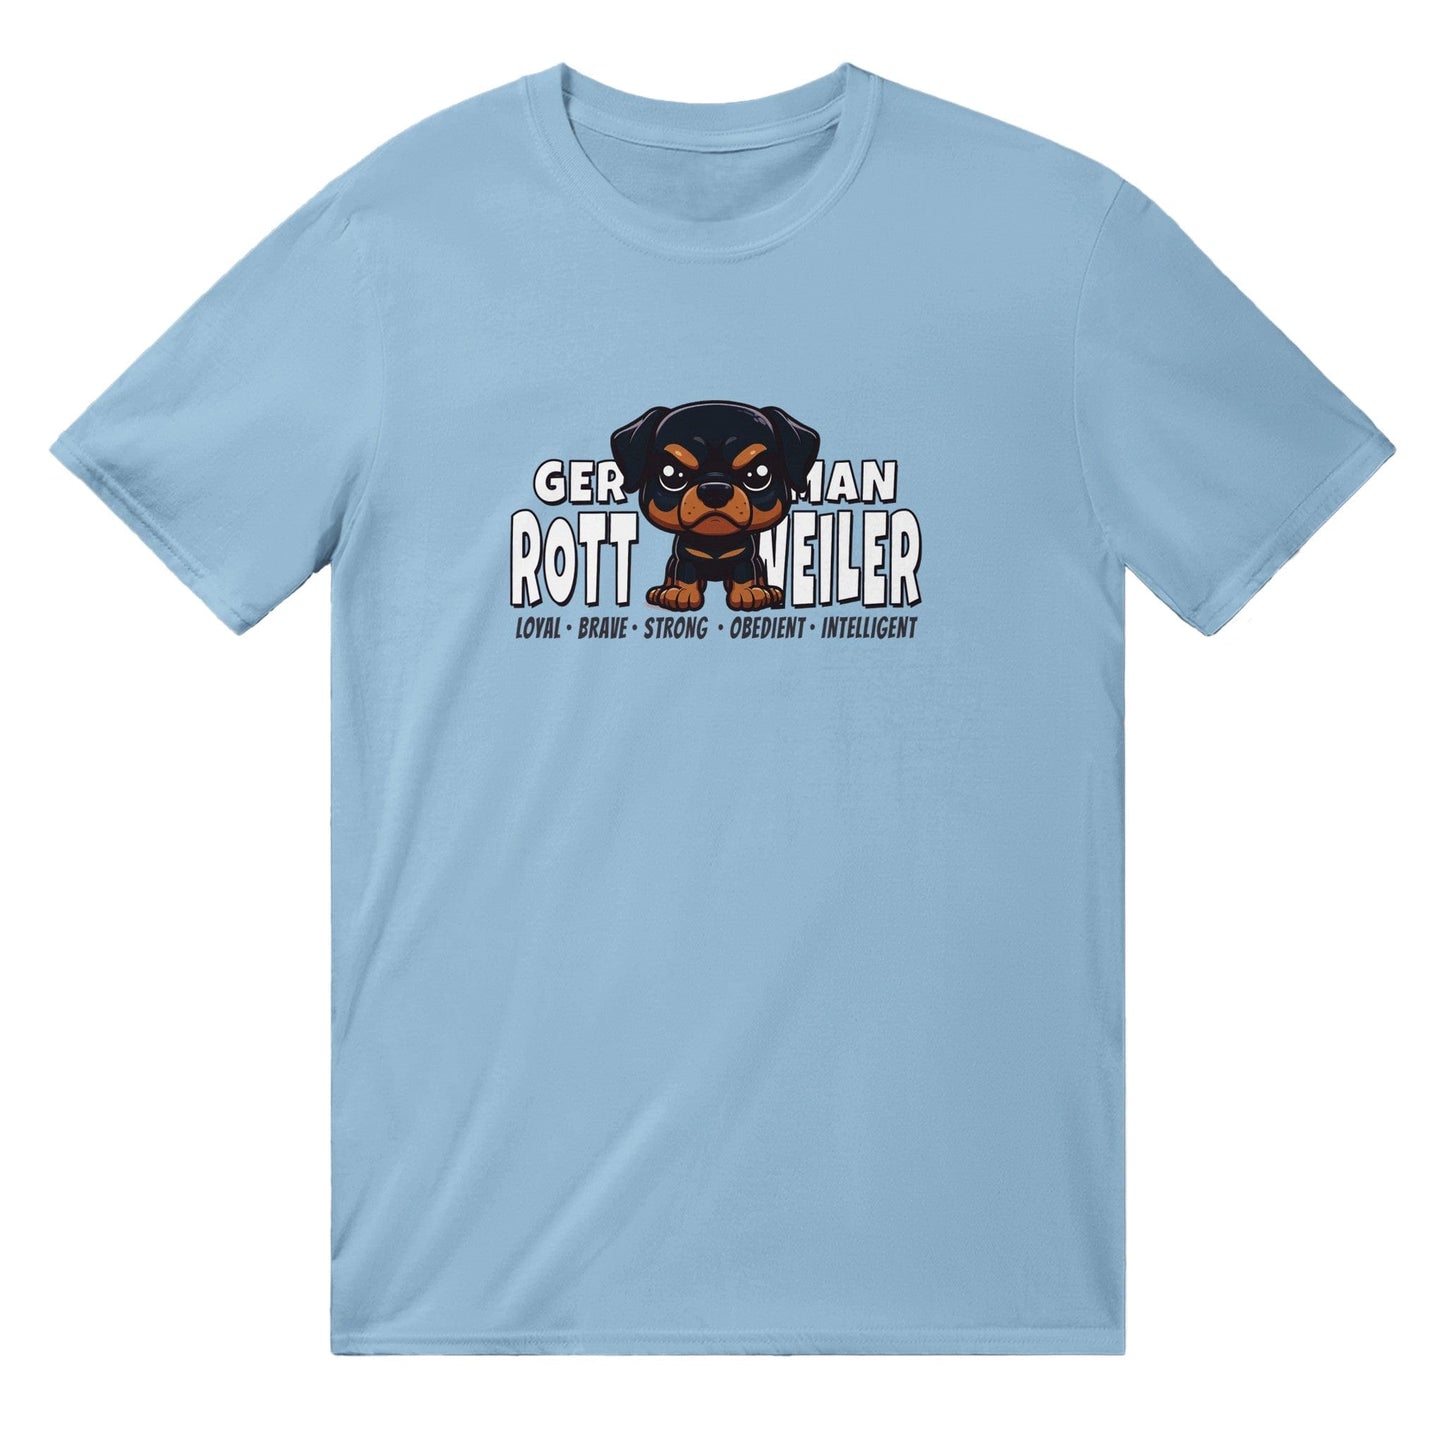 German Rottweiler T-Shirt Graphic Tee Light Blue / S BC Australia